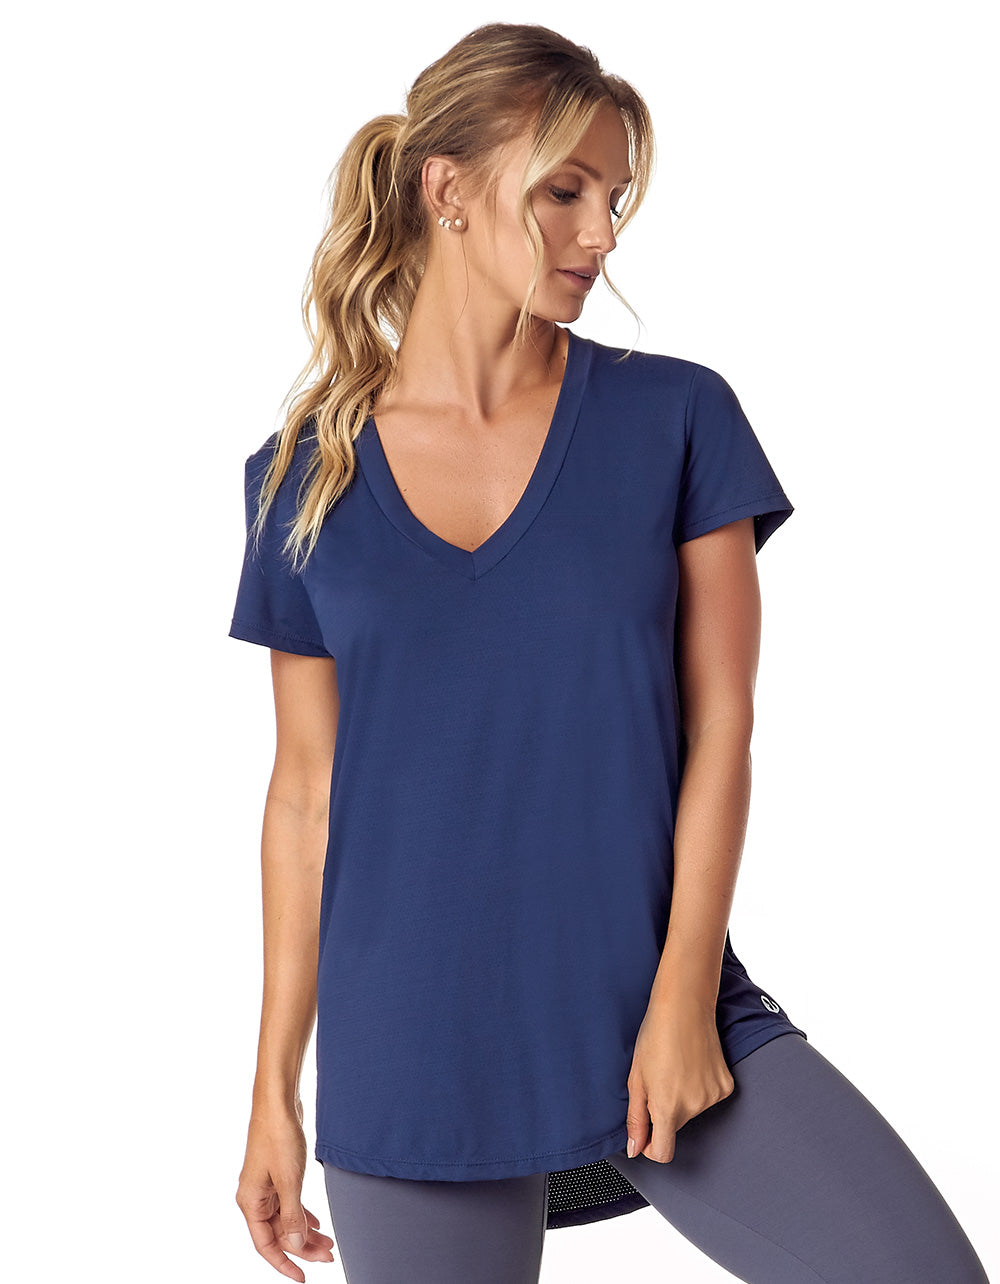 Vestem - Shirt Short Sleeve Janice Az. navy blue - BMC31.C0028